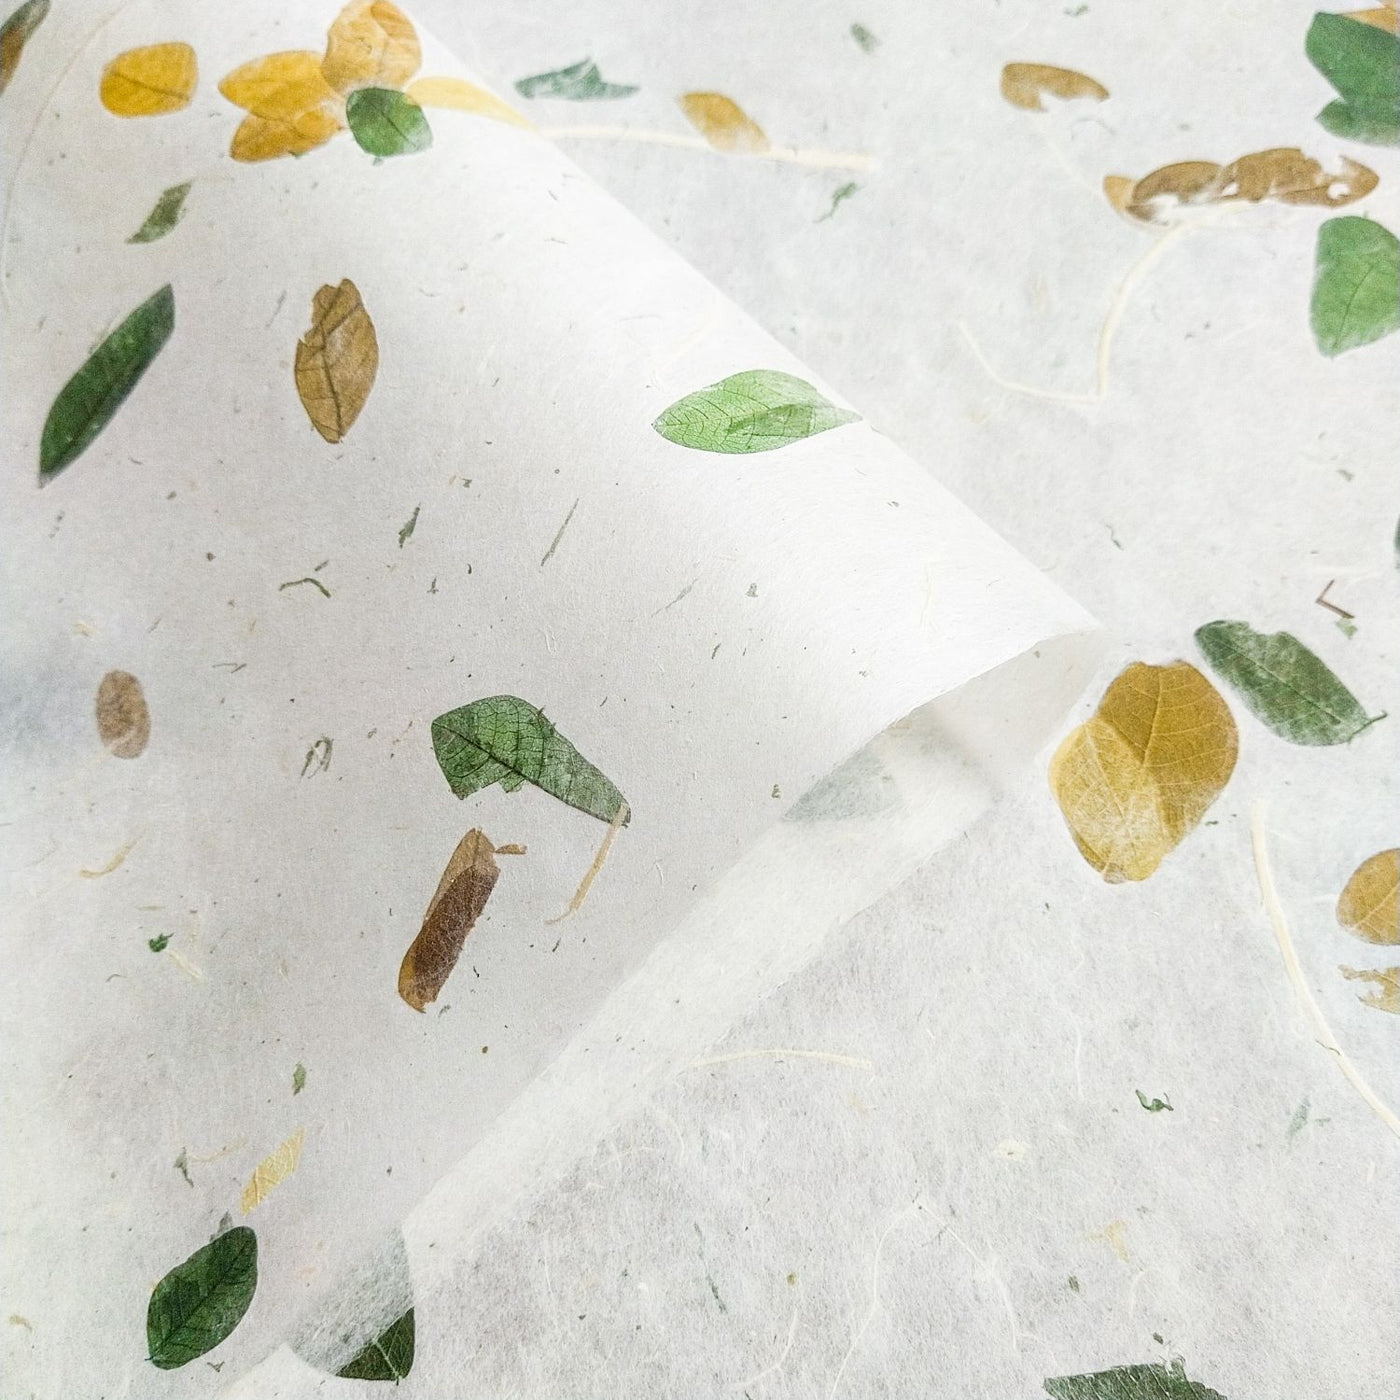 Raintree Kozo Paper Mulberry Paper by Kozo Studio